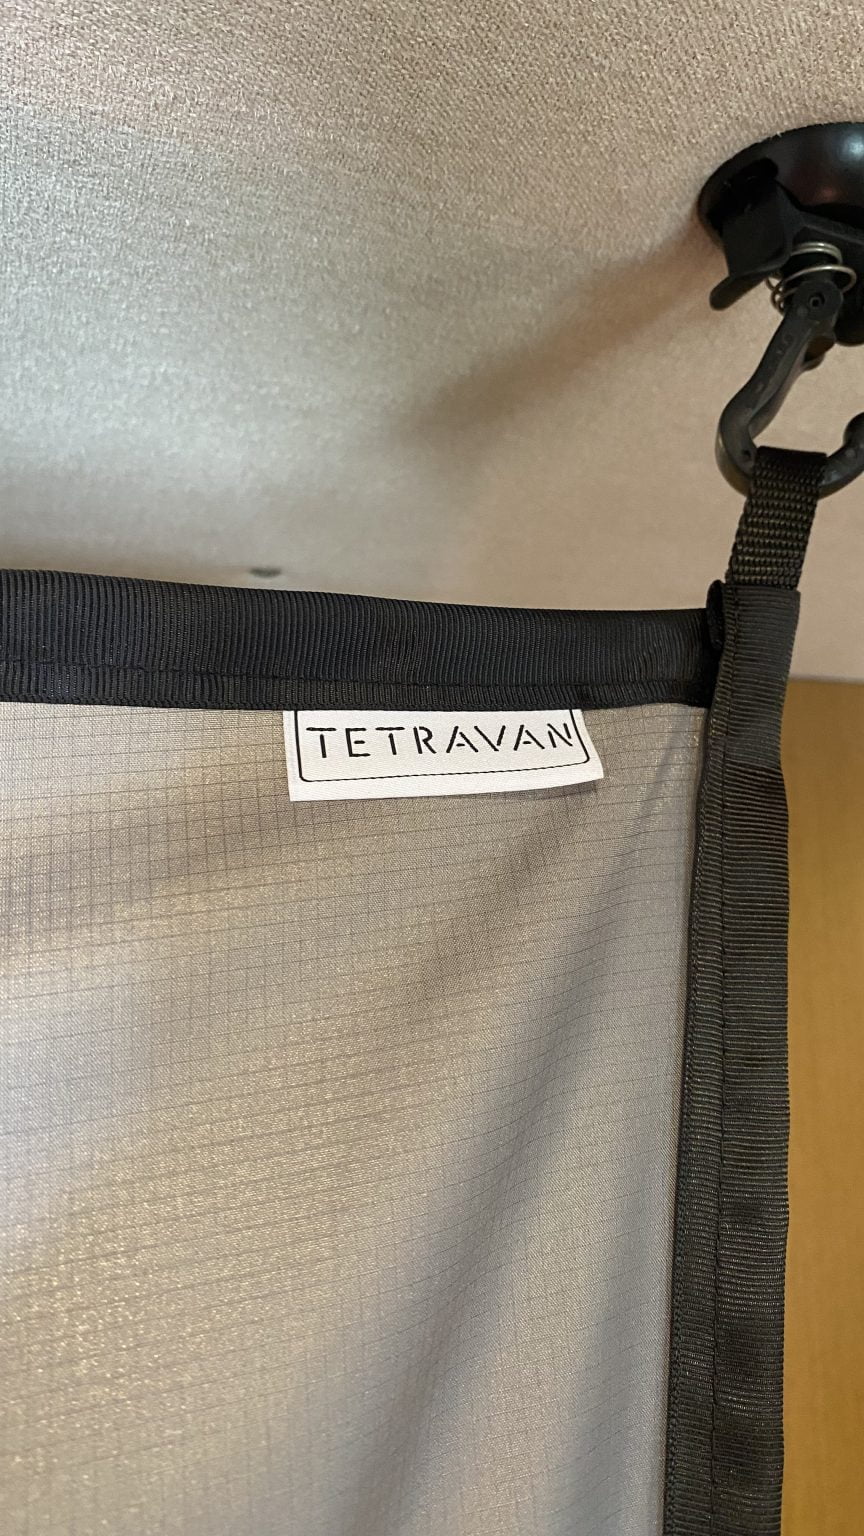 Tetravan Flush Mounting Shower Pan (In-Floor) - Vanlife Outfitters